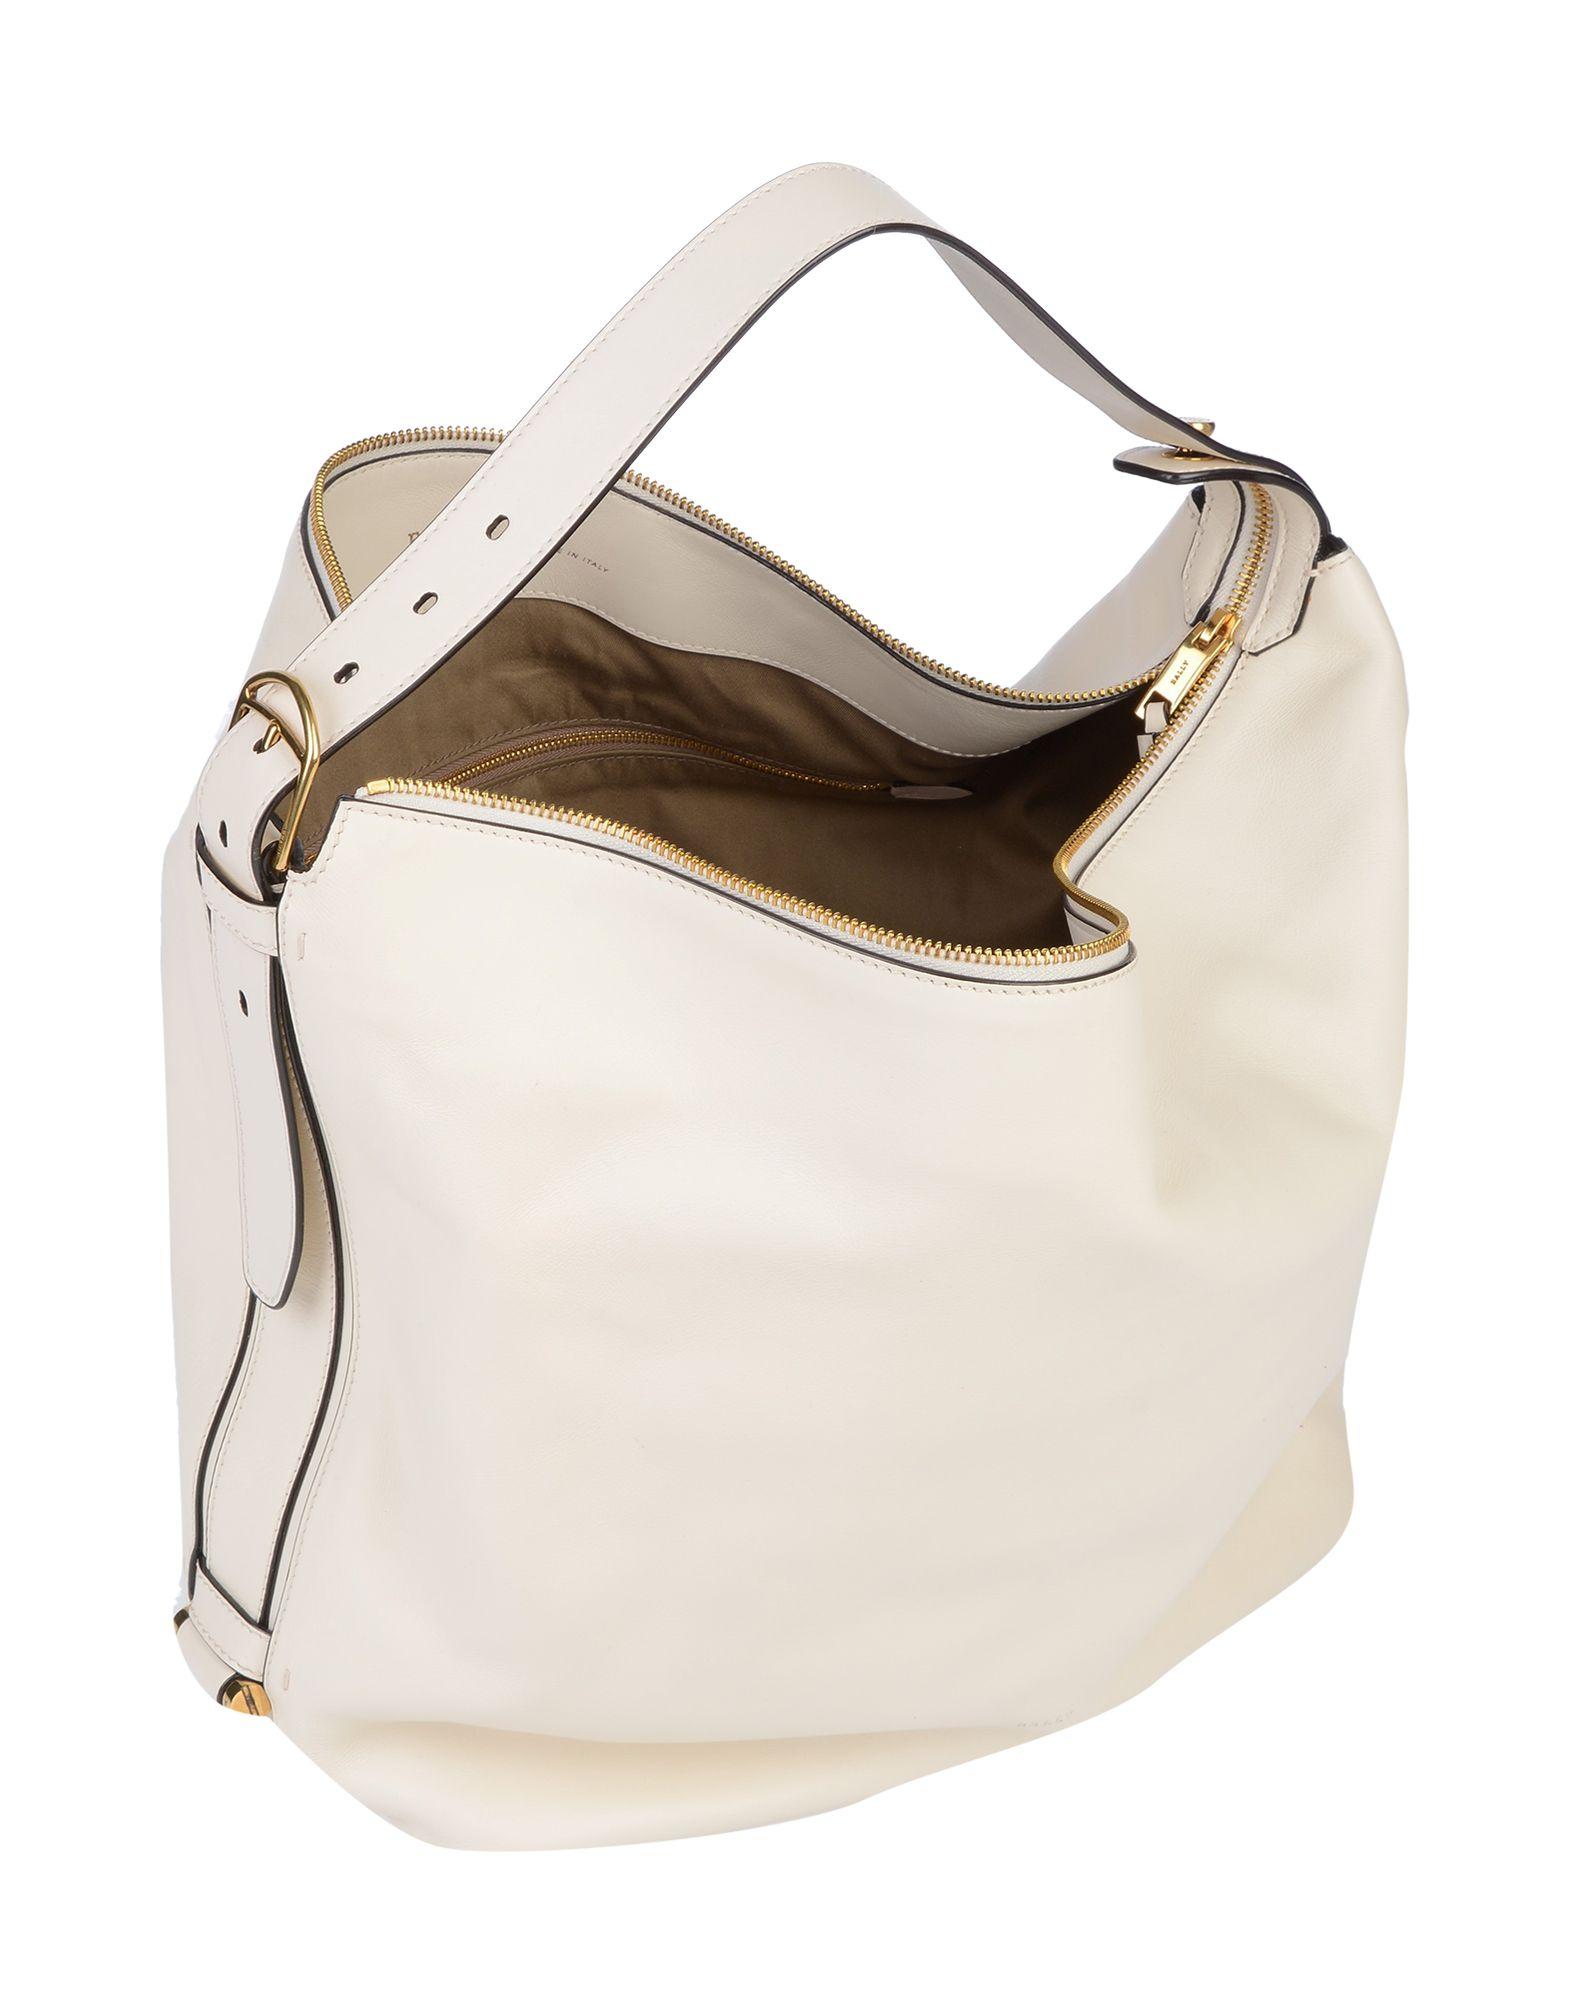 Bally Handbag in White - Lyst